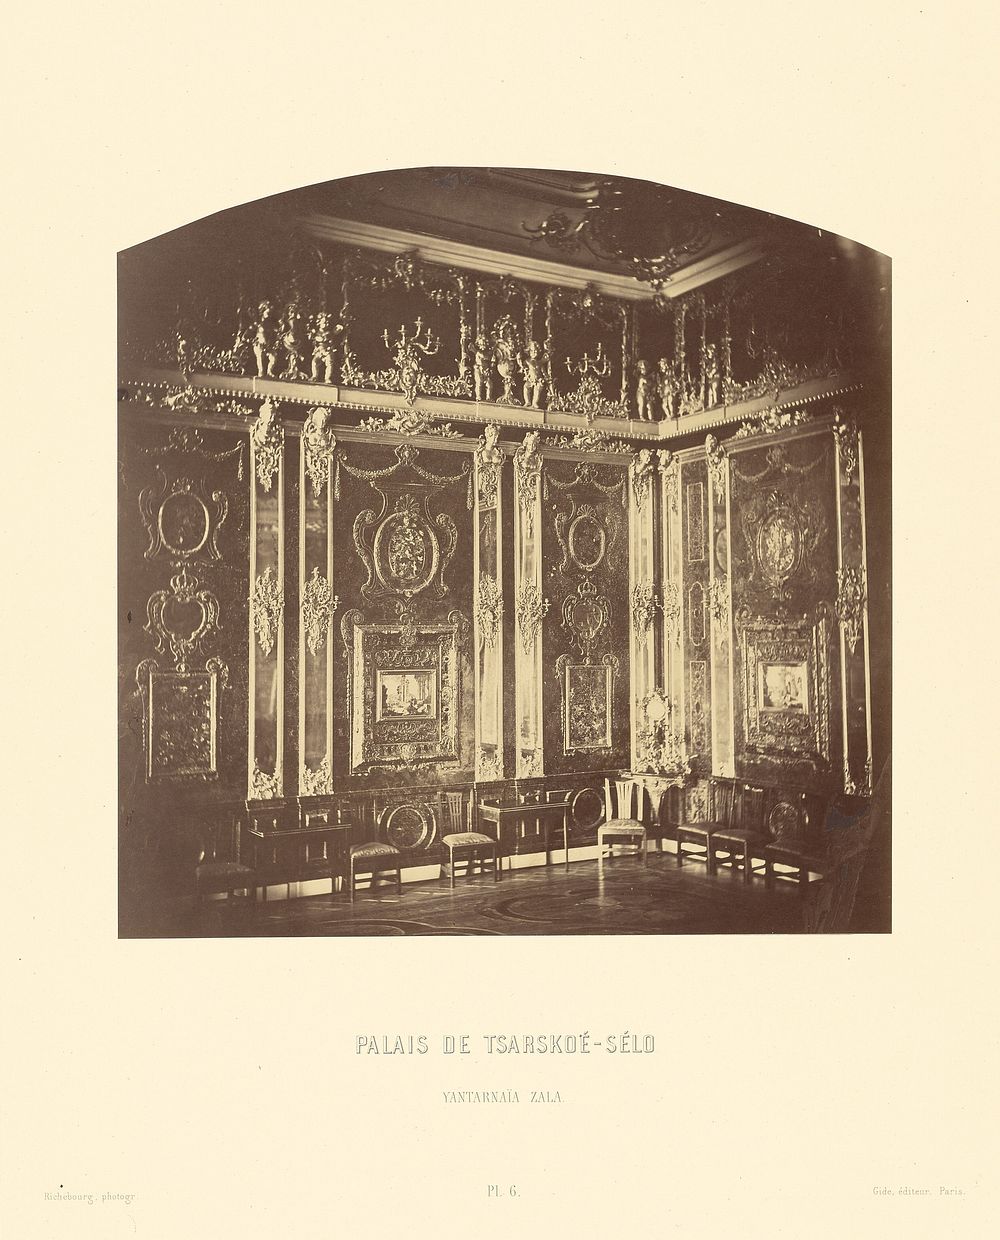 Palais de Tsarskoe-Selo, Yantarnaia Zala by Pierre Ambrose Richebourg